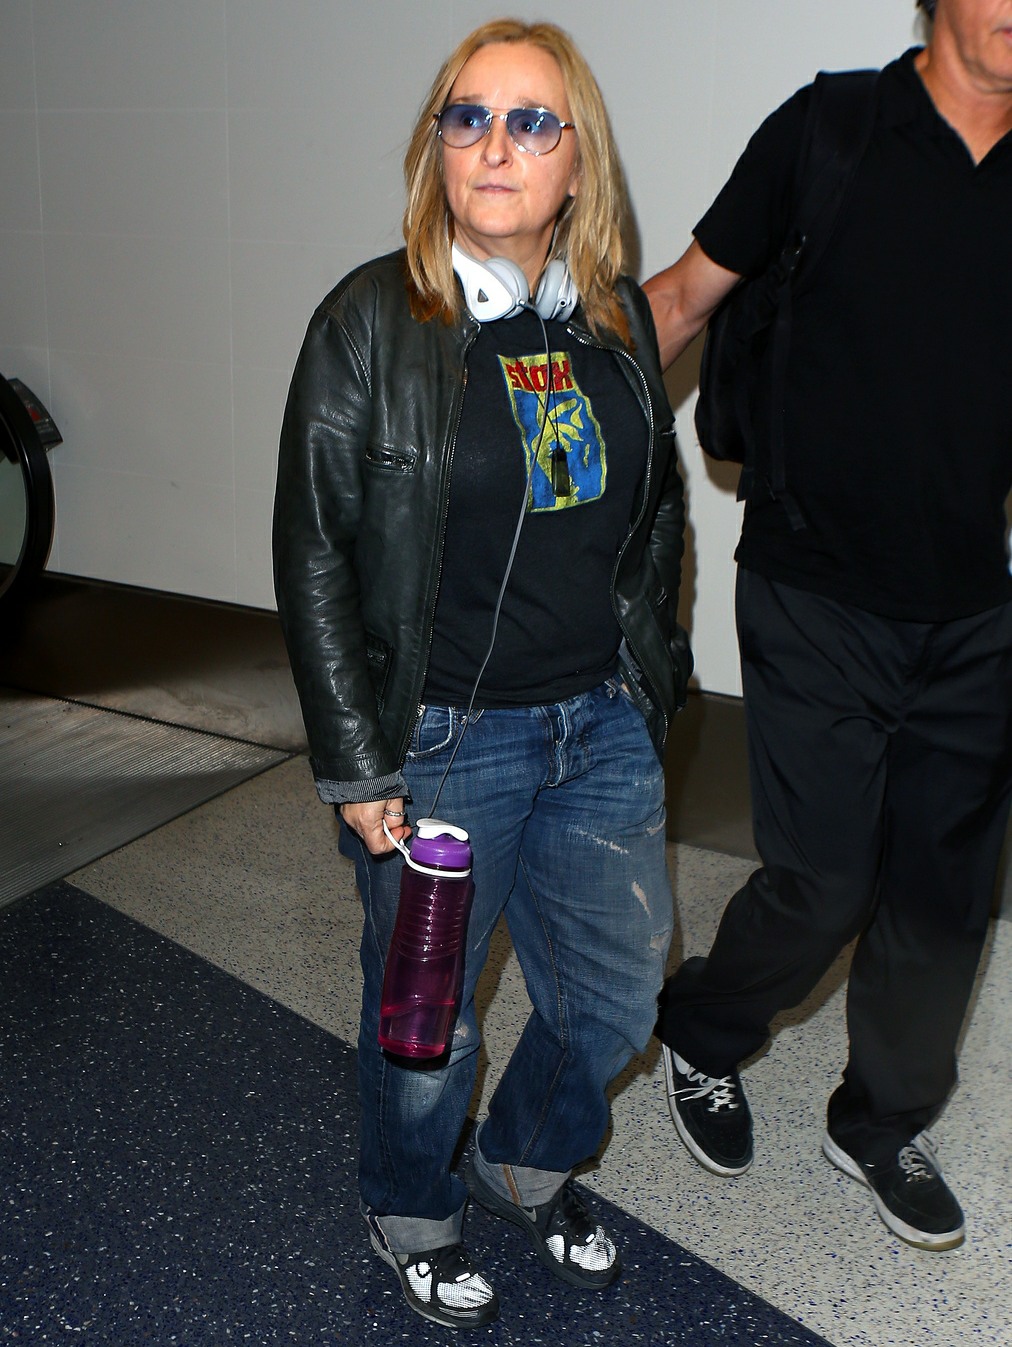 A casual Melissa Etheridge seen walking through LAX departures